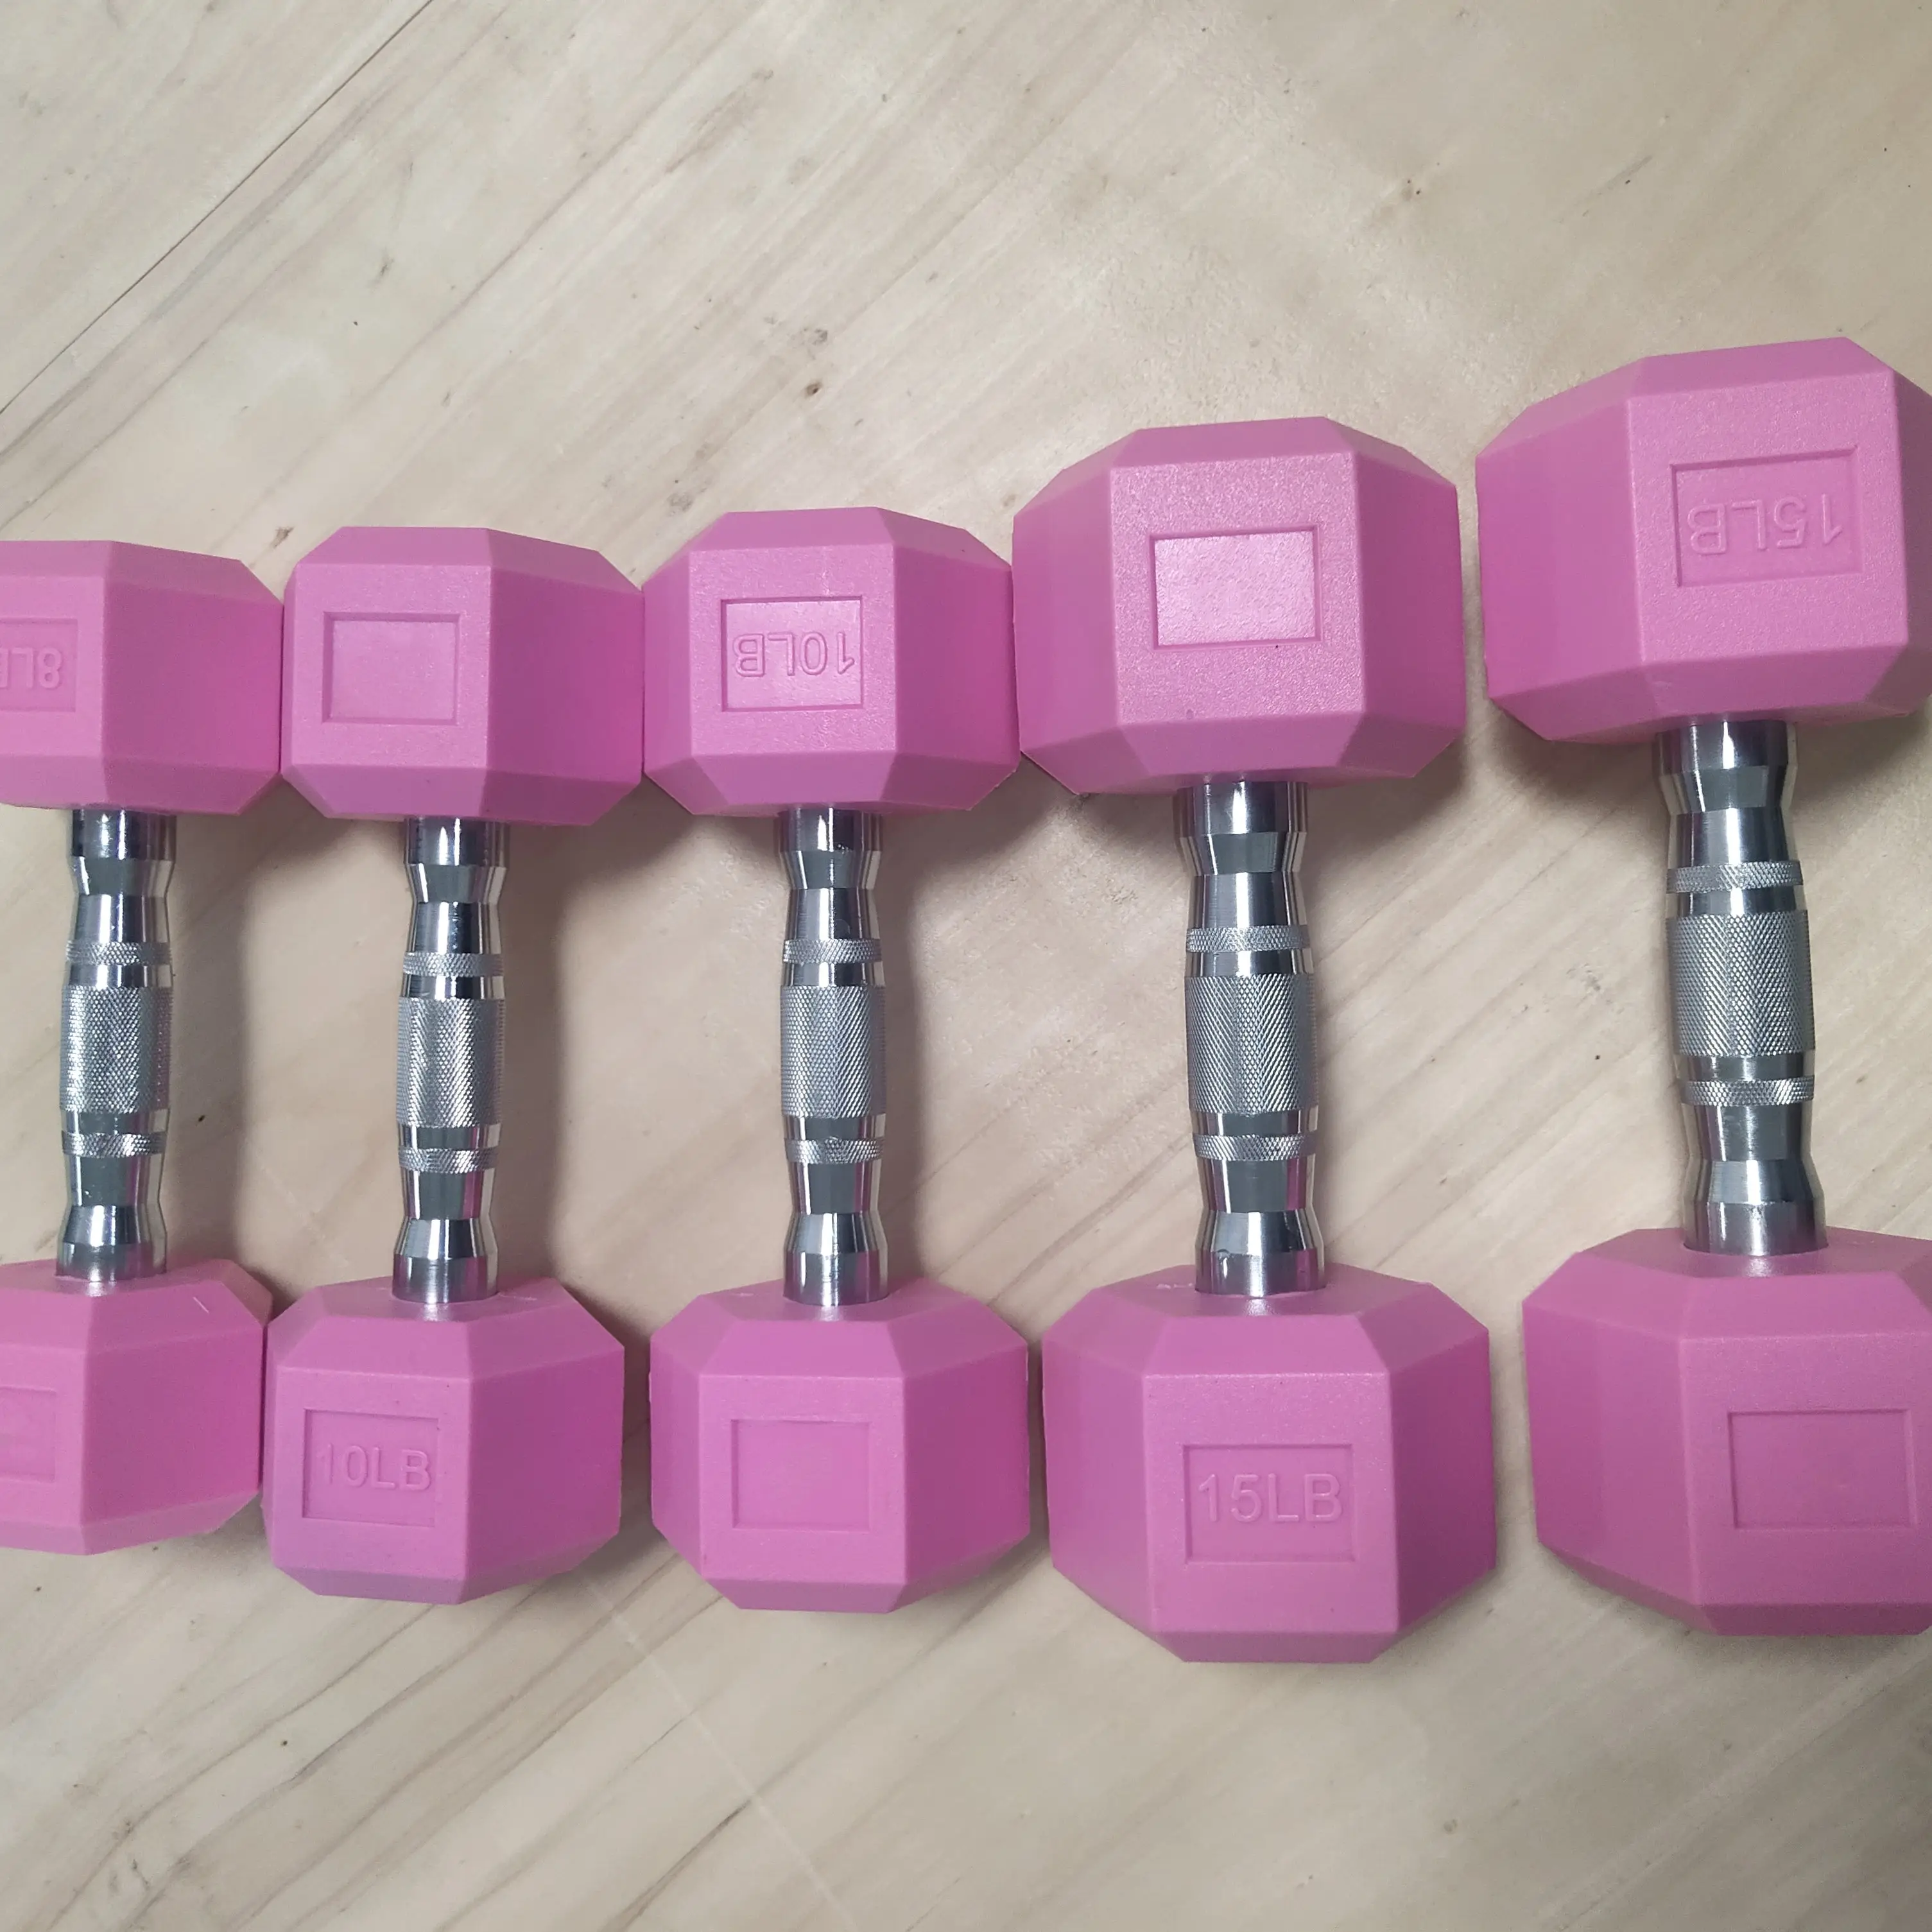 Una settimana di spedizione elegante in plastica pvc pesi esagonali attrezzature per esercizi 4 kg colorati set manubri di colore rosa in vendita